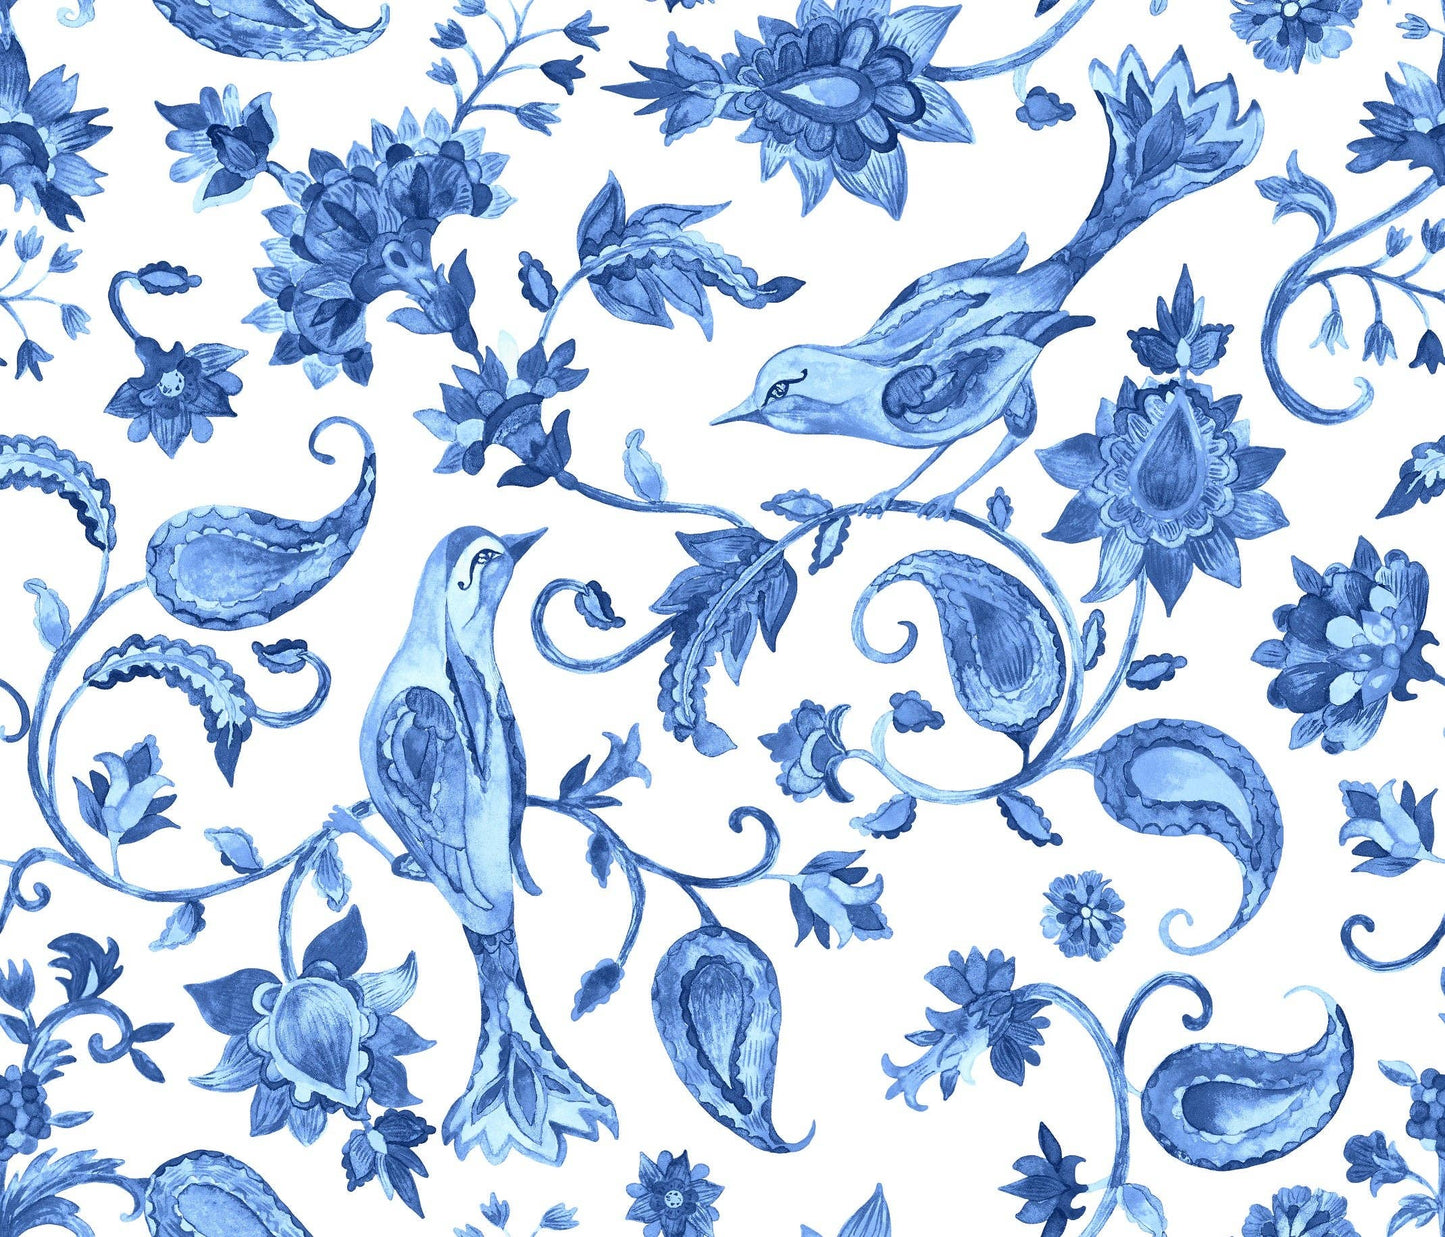 Swedish Dishcloth - Blue and White Tile Transferware Birds